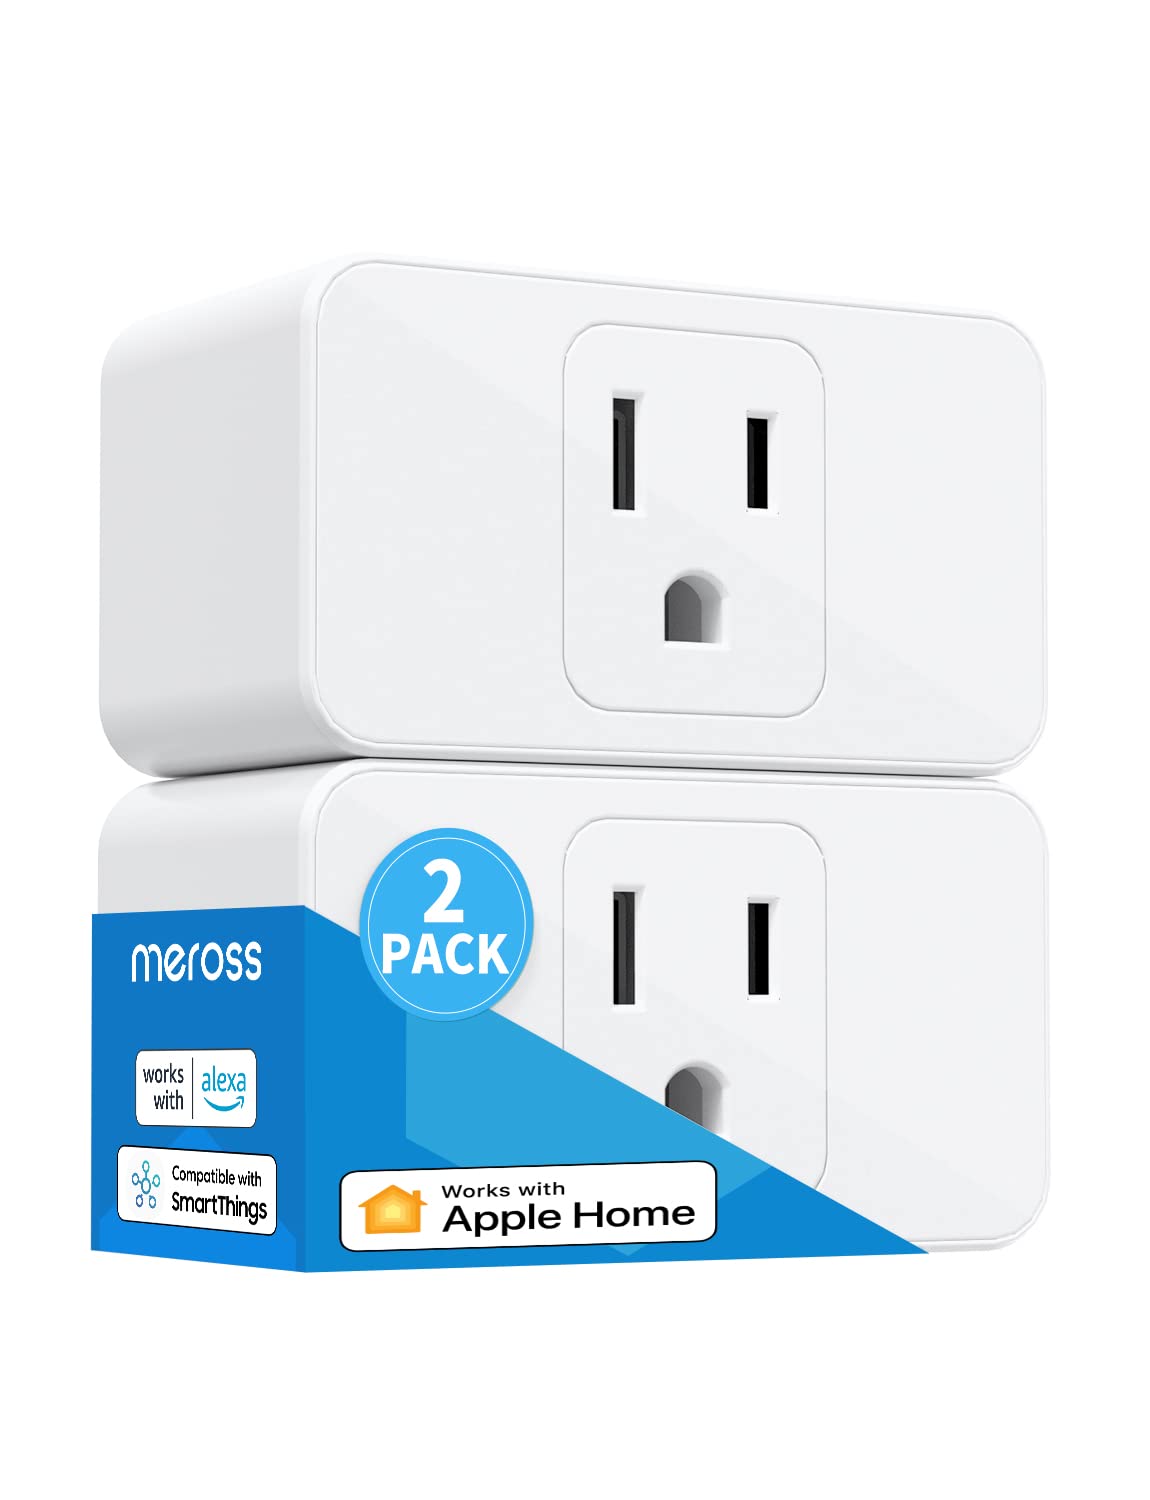 Meross Smart Plug Mini Support Apple HomeKit, Siri, Alexa, App Control, Timer, 15A & Reliable Wi-Fi, No Hub Needed, 2.4G WiFi Only, 2 Pack